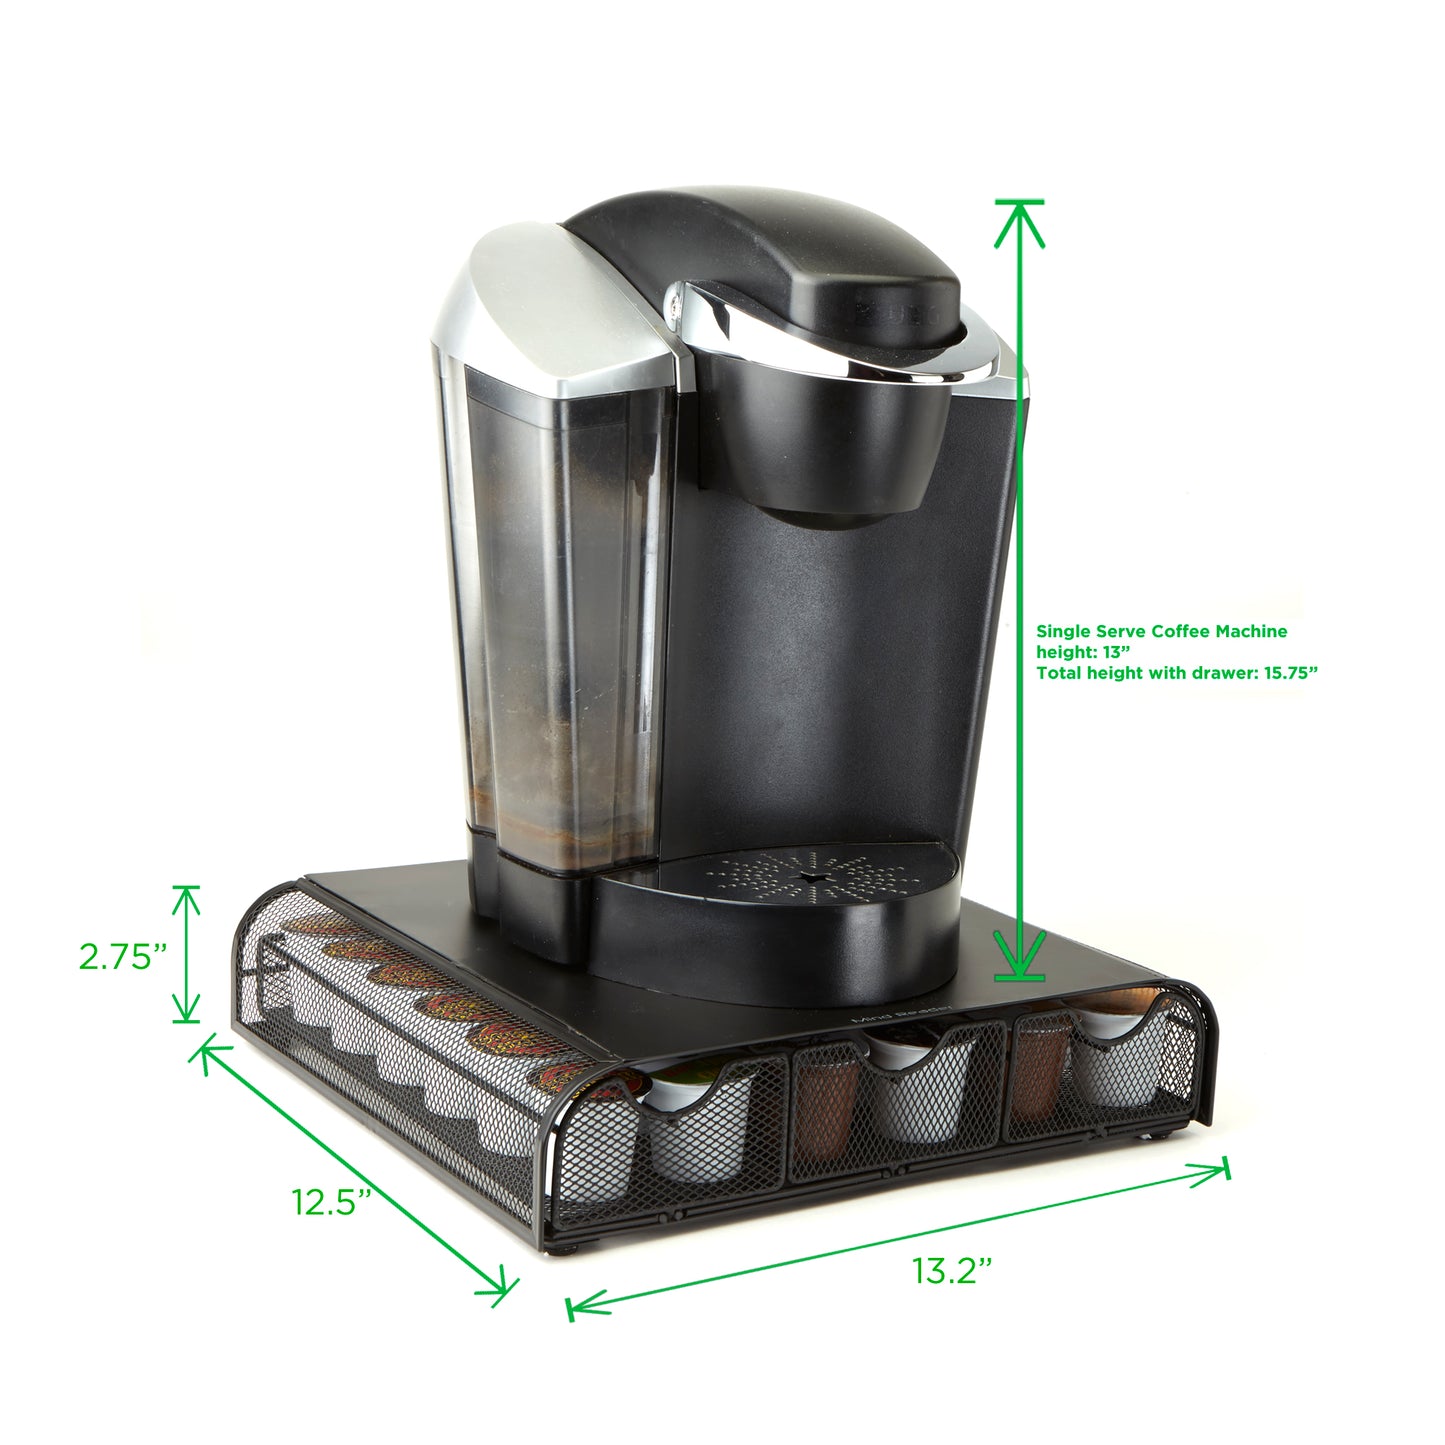 Mind Reader Anchor Collection, 3-Drawer Single Serve Coffee Pod Drawer, 36 Coffee Pod Capacity, Countertop Organizer, Coffee Machine Base